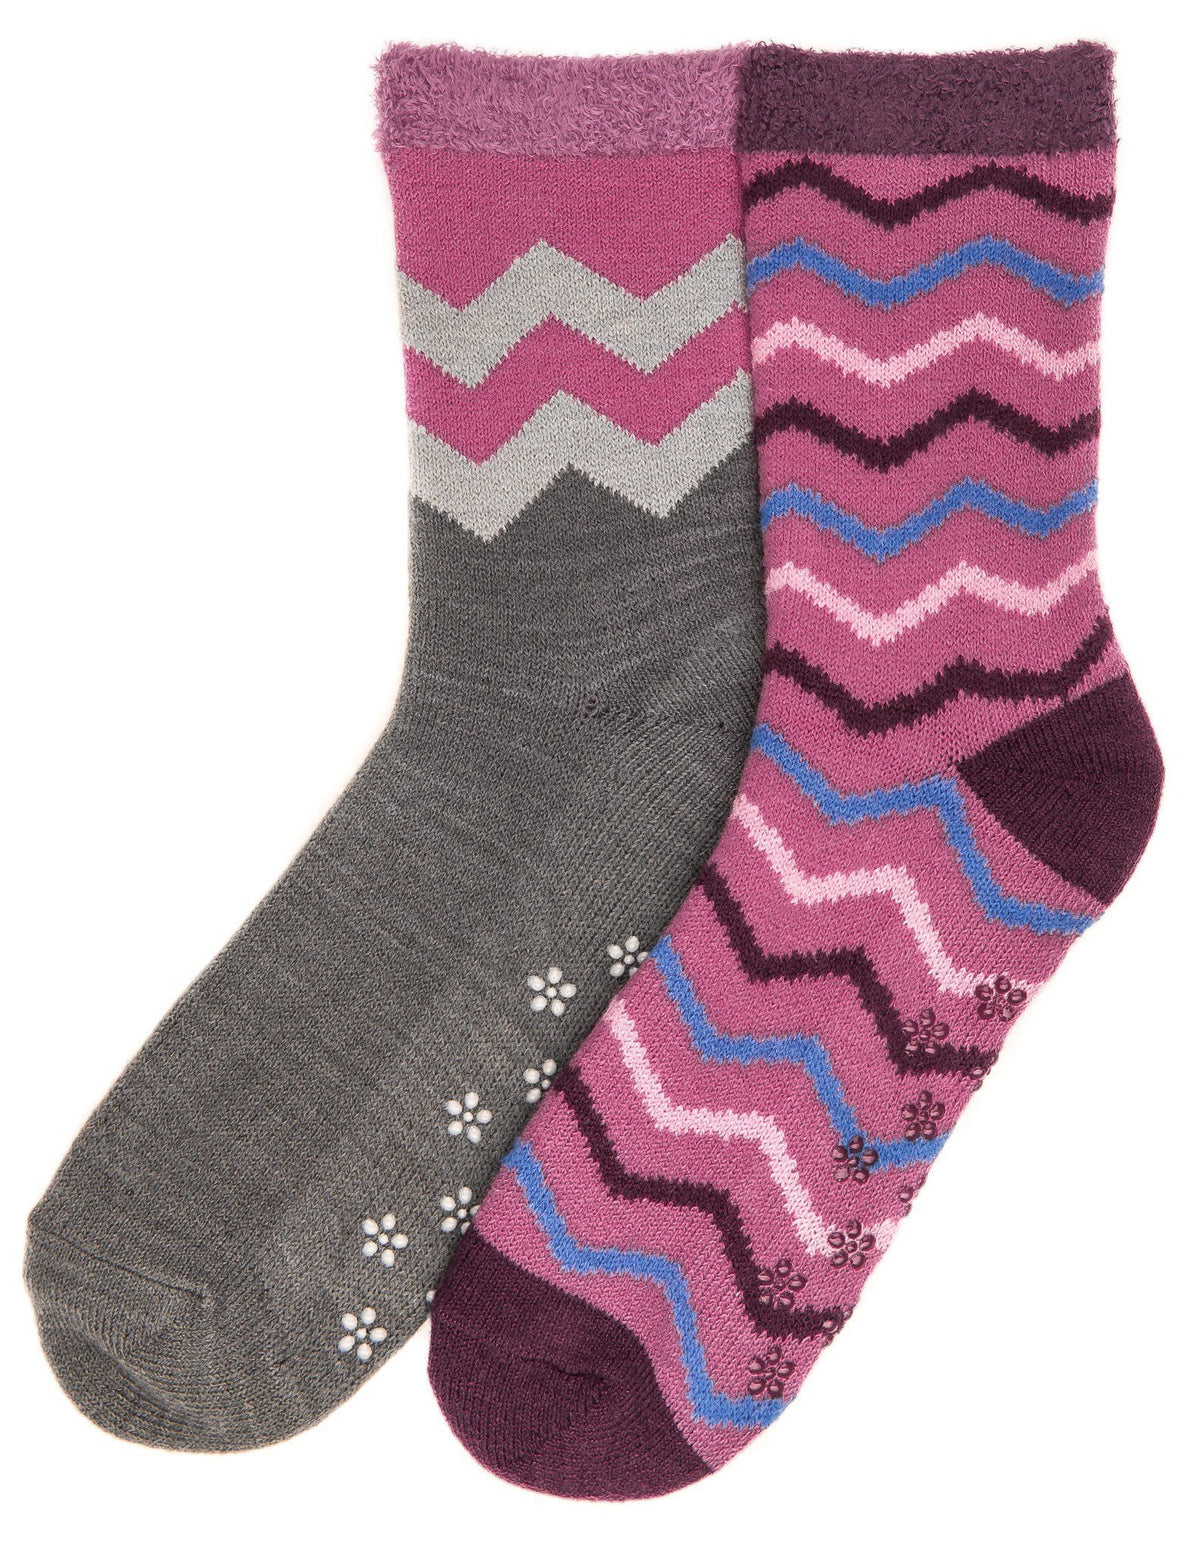 Women's Soft Premium Double Layer Winter Crew Socks - 2 Pairs - Set A2